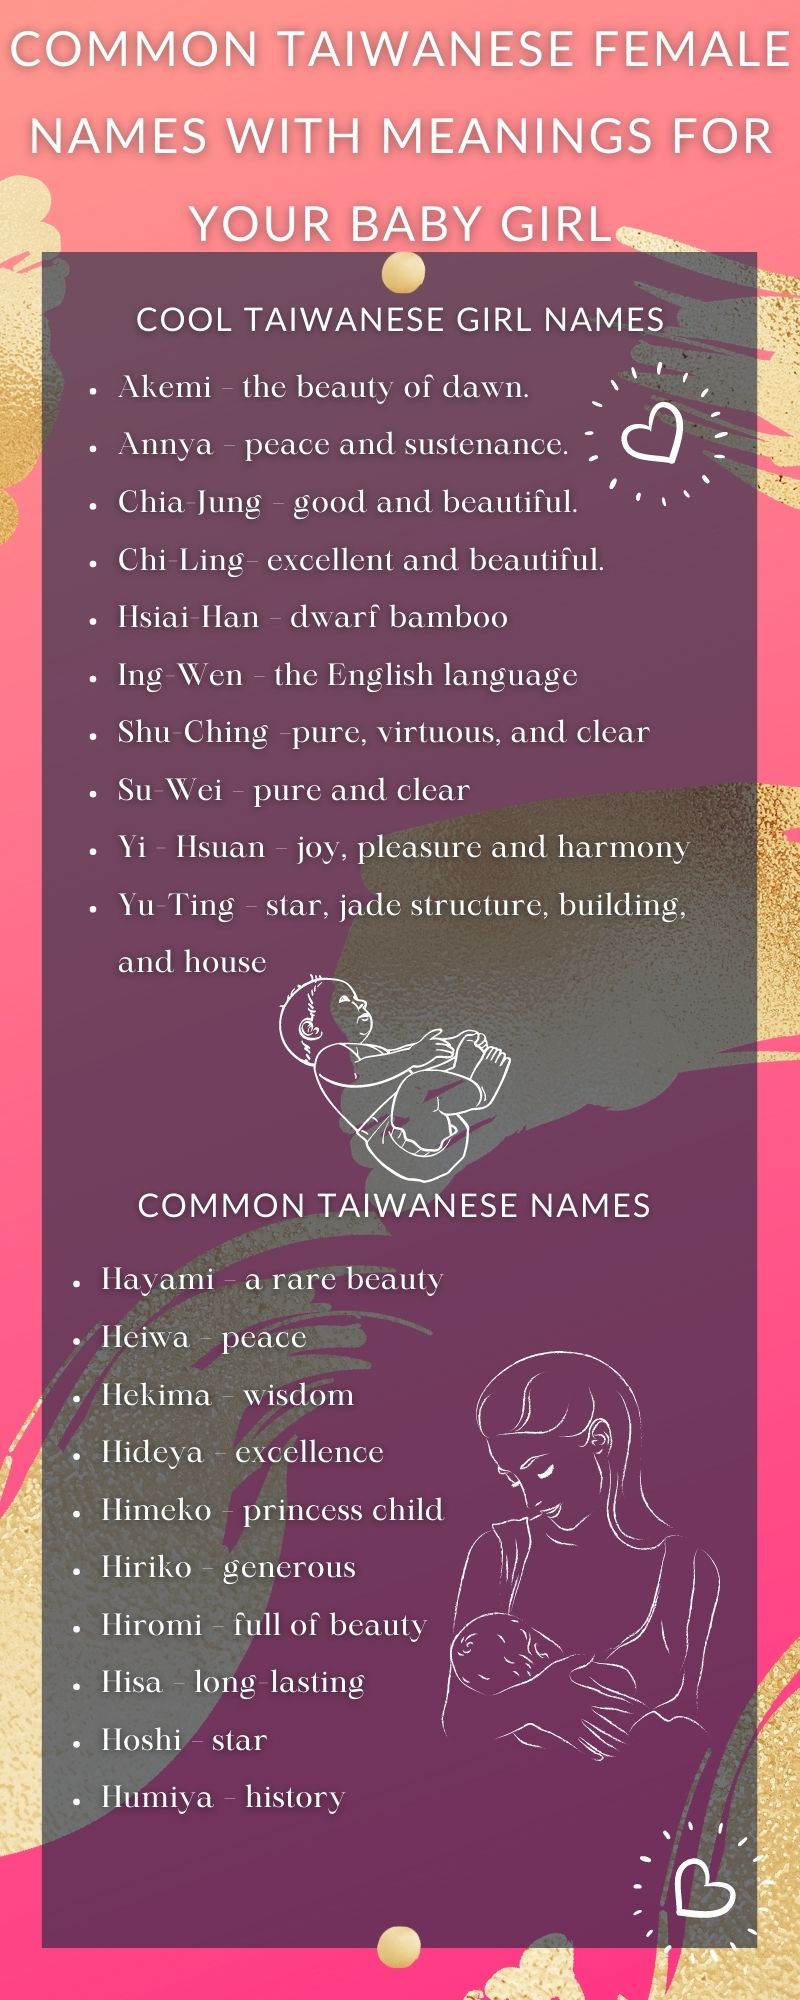 Common Taiwanese female names